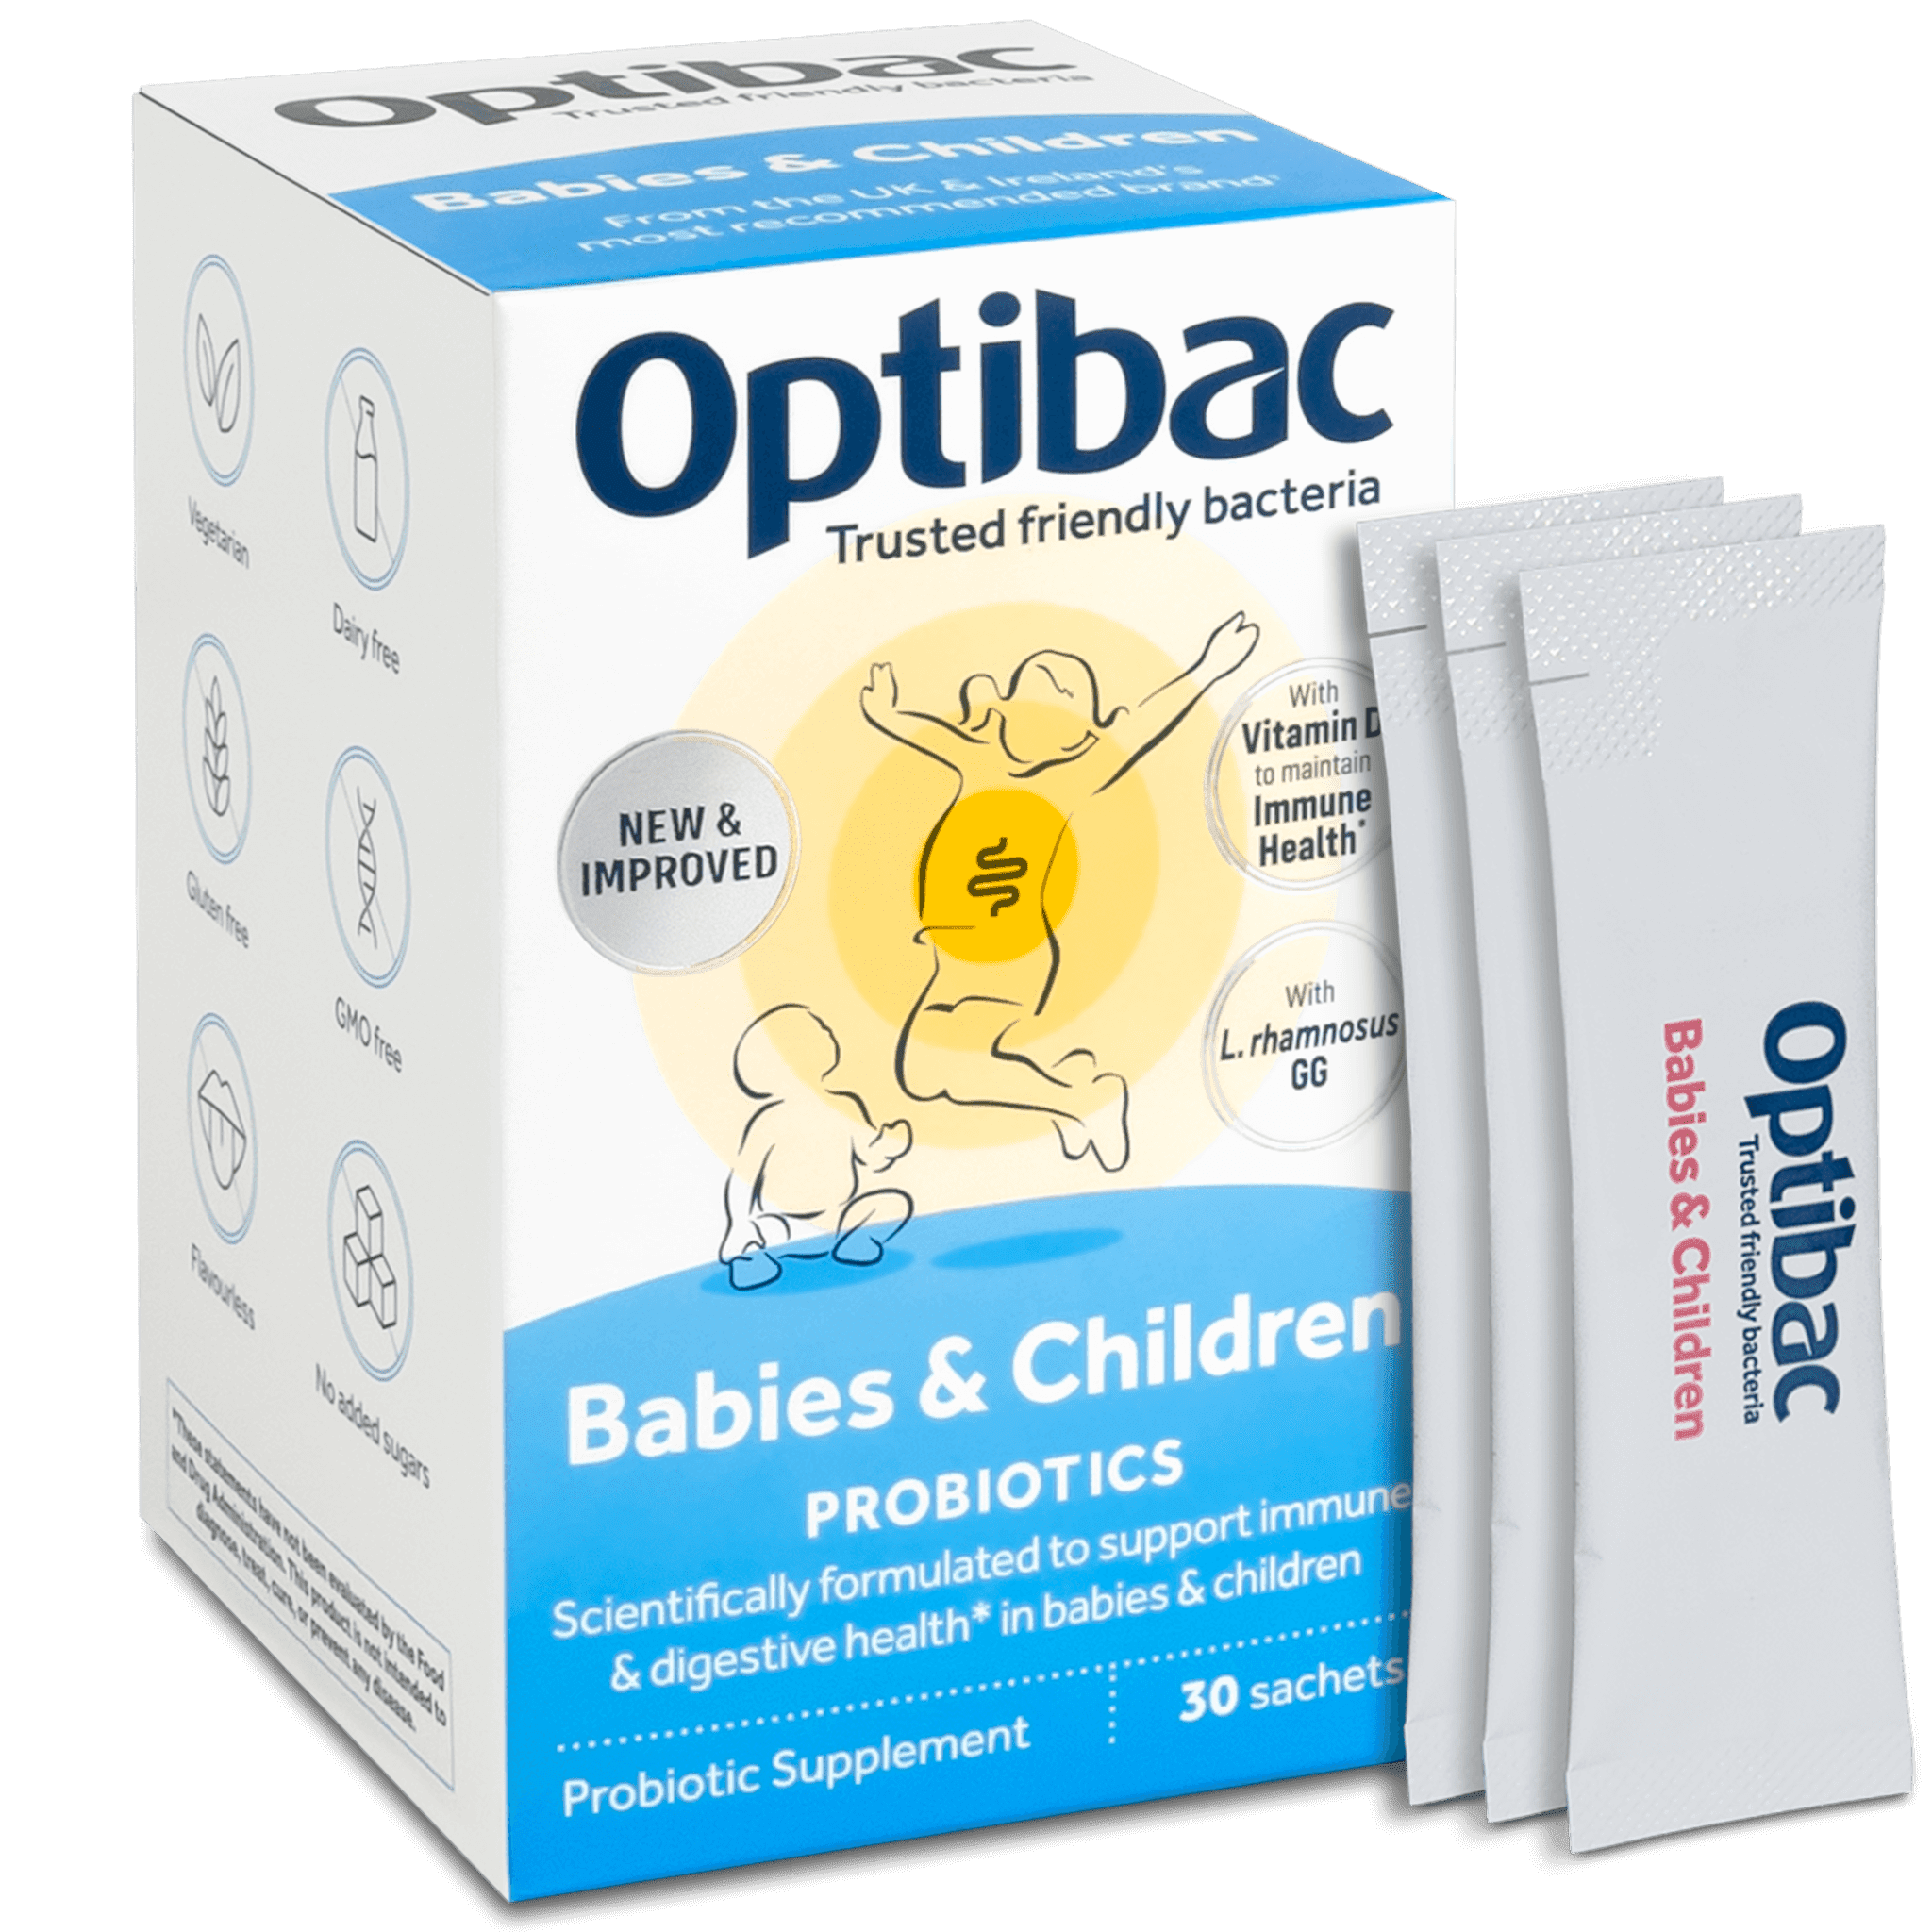 Optibac Probiotics Babies & Children - contents